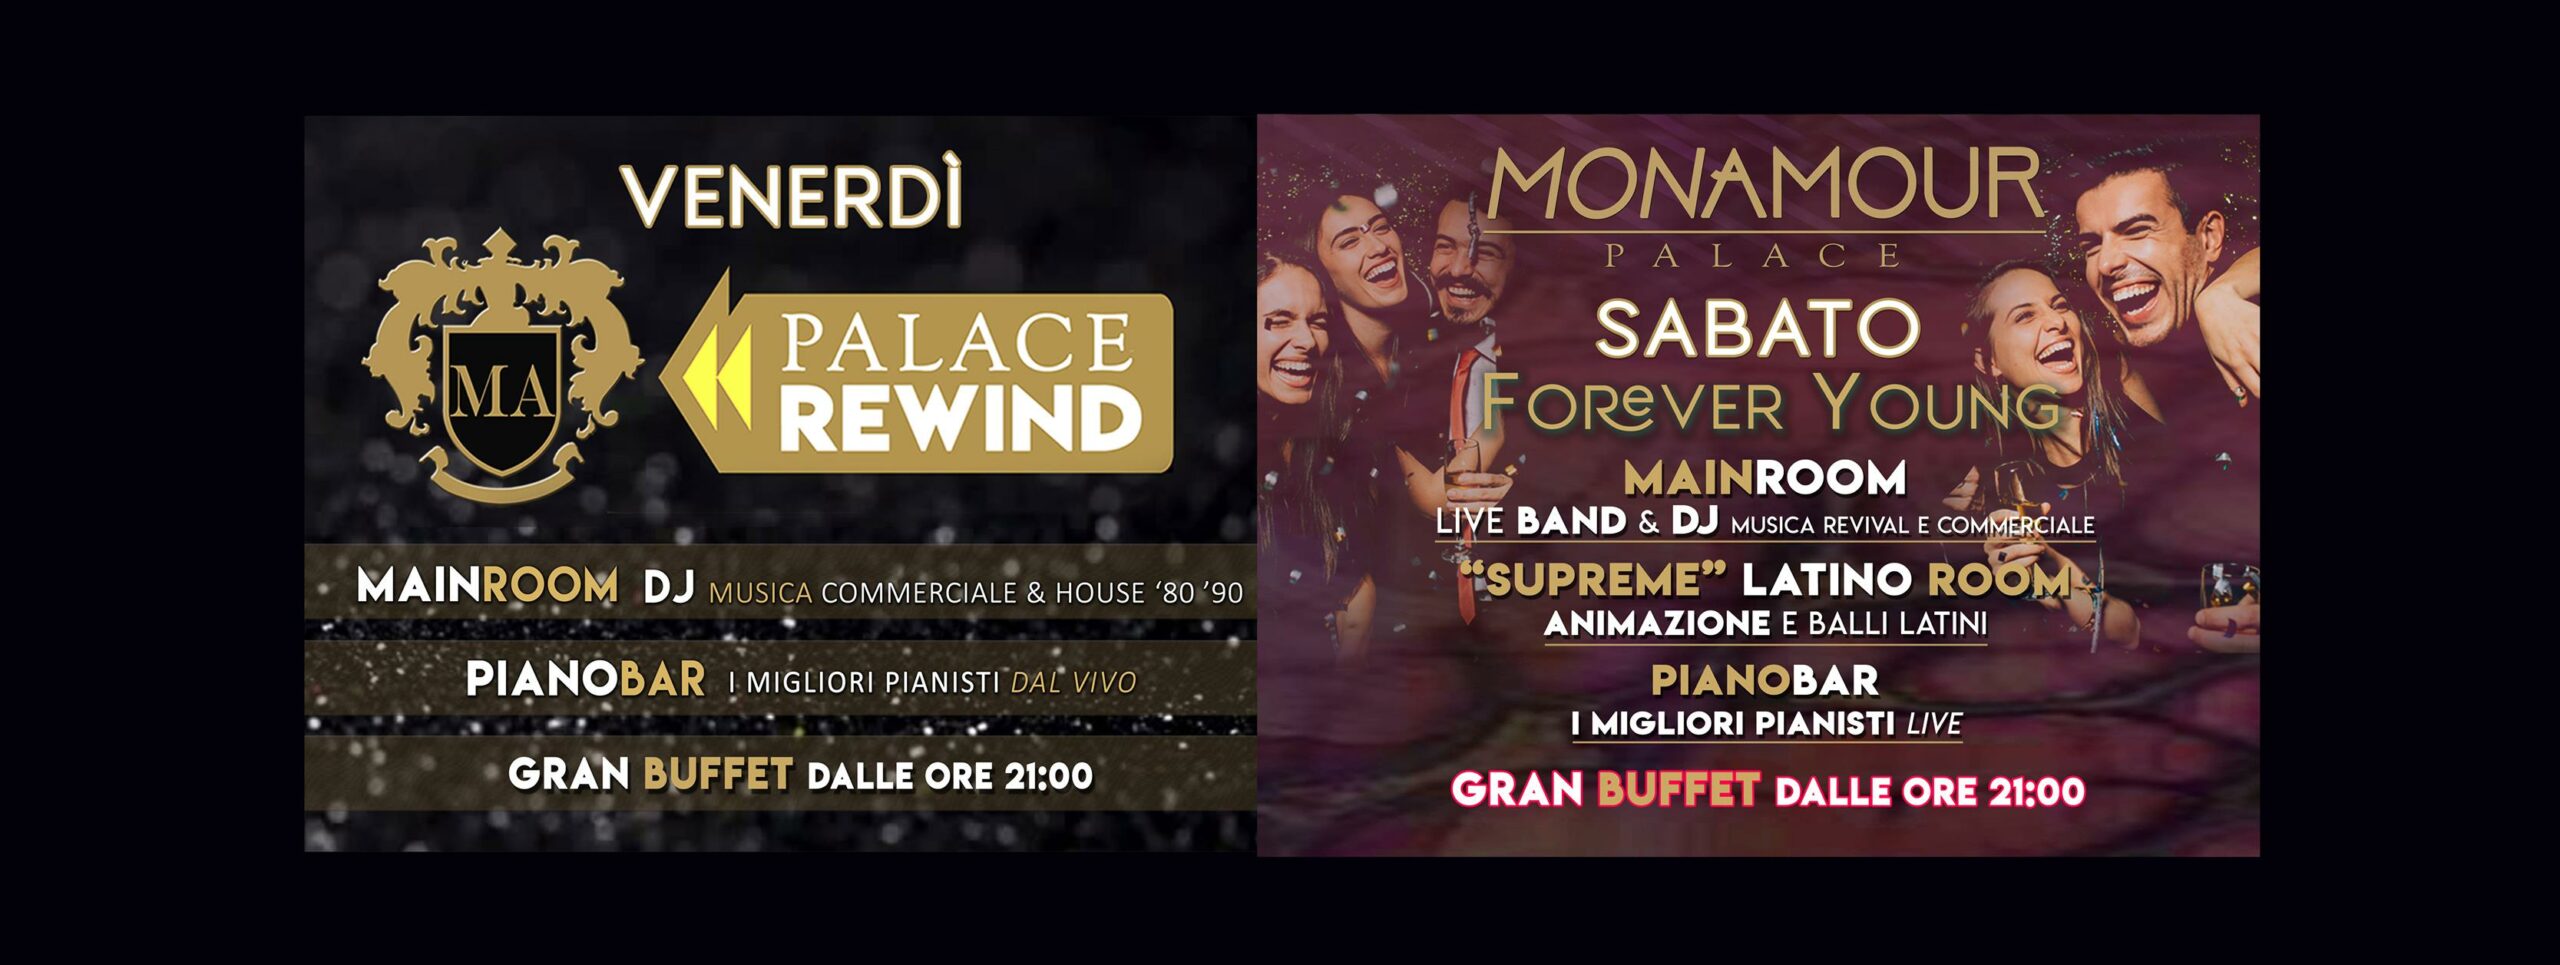 Discoteca Mon Amour Rimini Palace Rewind